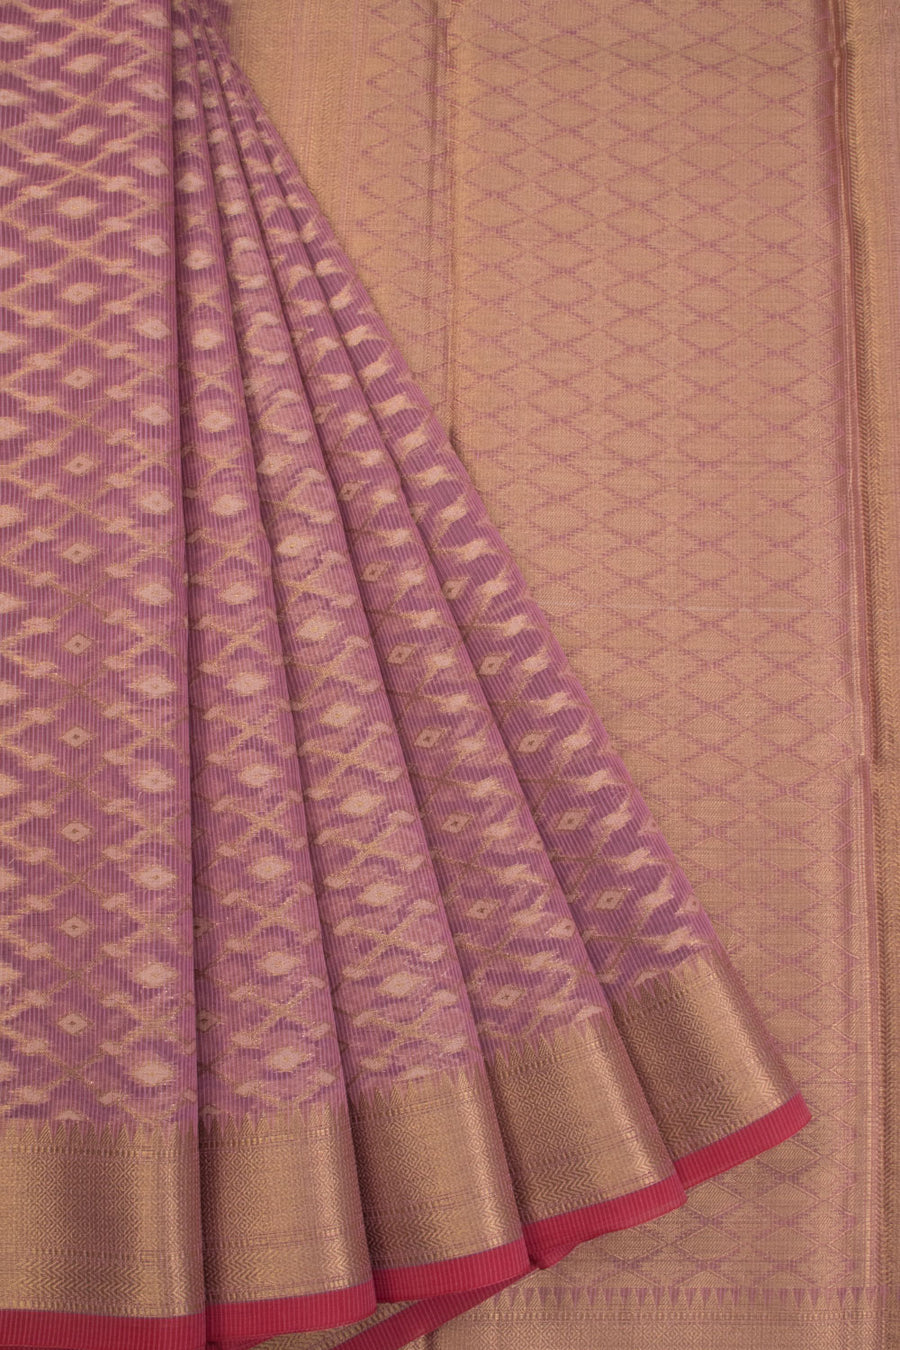 Lavender Handloom Banarasi Silk Cotton Saree  10070487 - Avishya